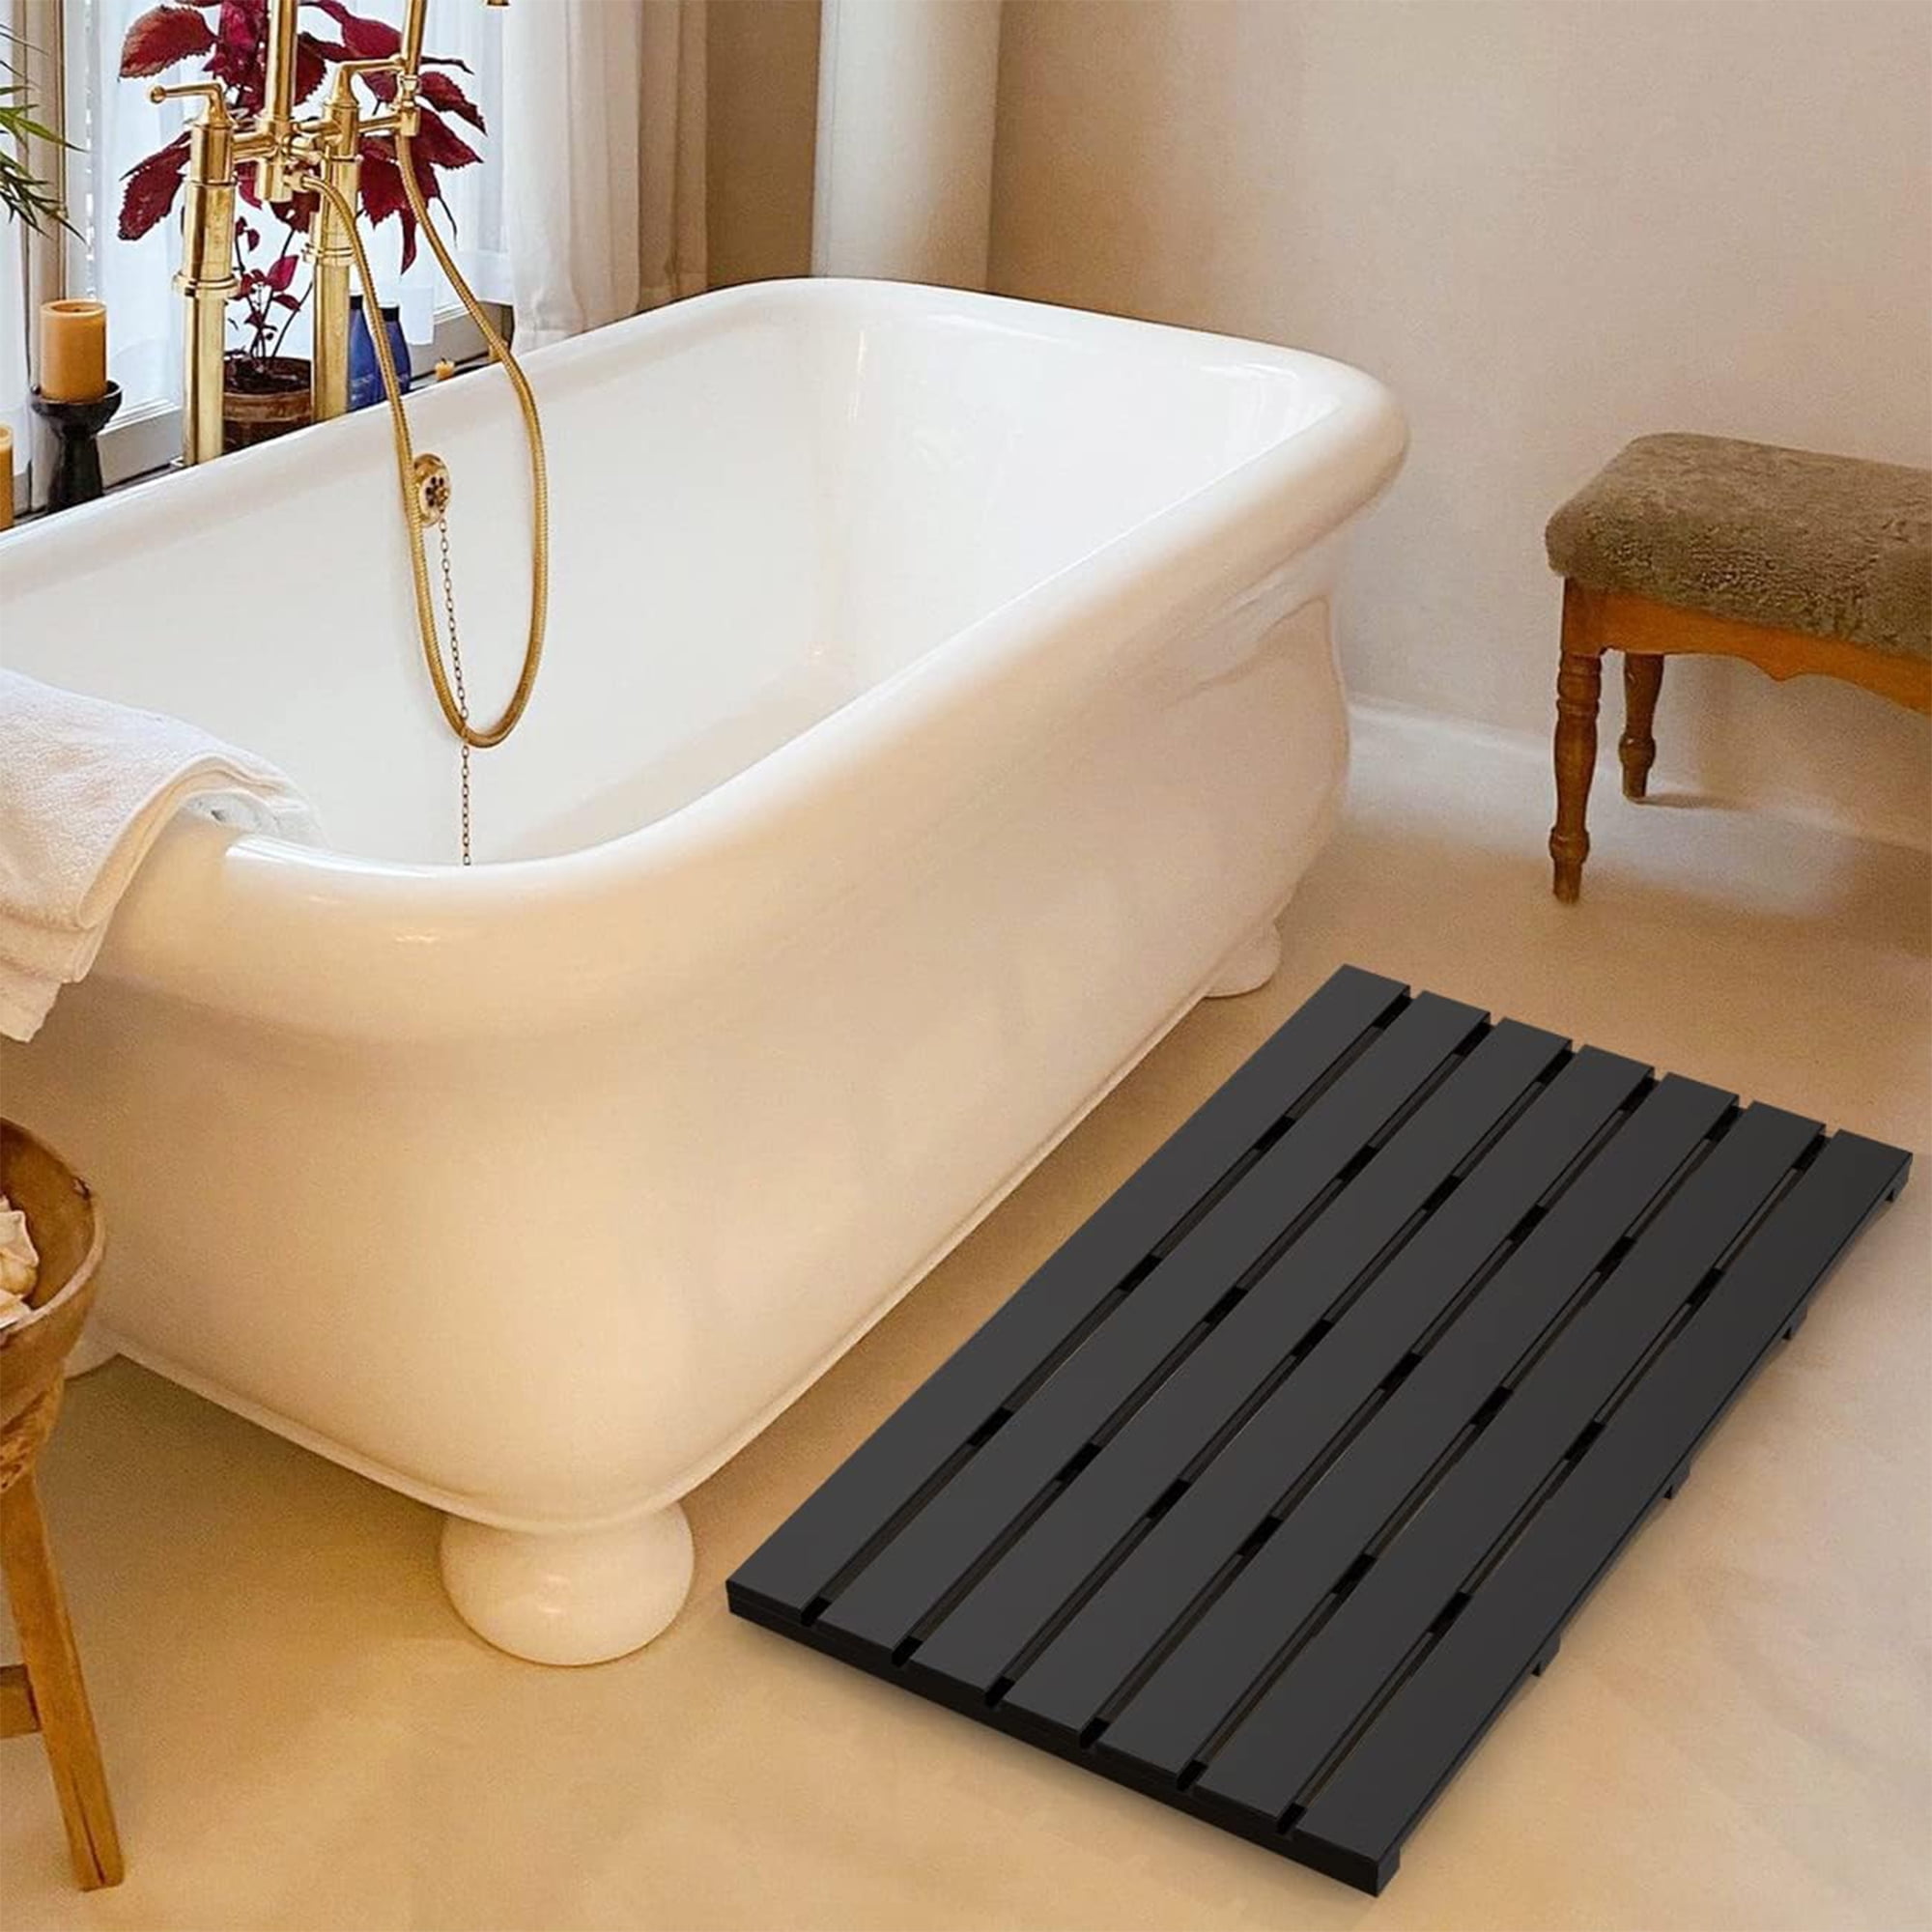 Bamboo Bath Mat Bathroom Runner Long Large Rugs Floor Wood Shower Bathtub  Waterproof Non Slip Accessories 16x48 Inch Easy to Clean,Black,1 pc